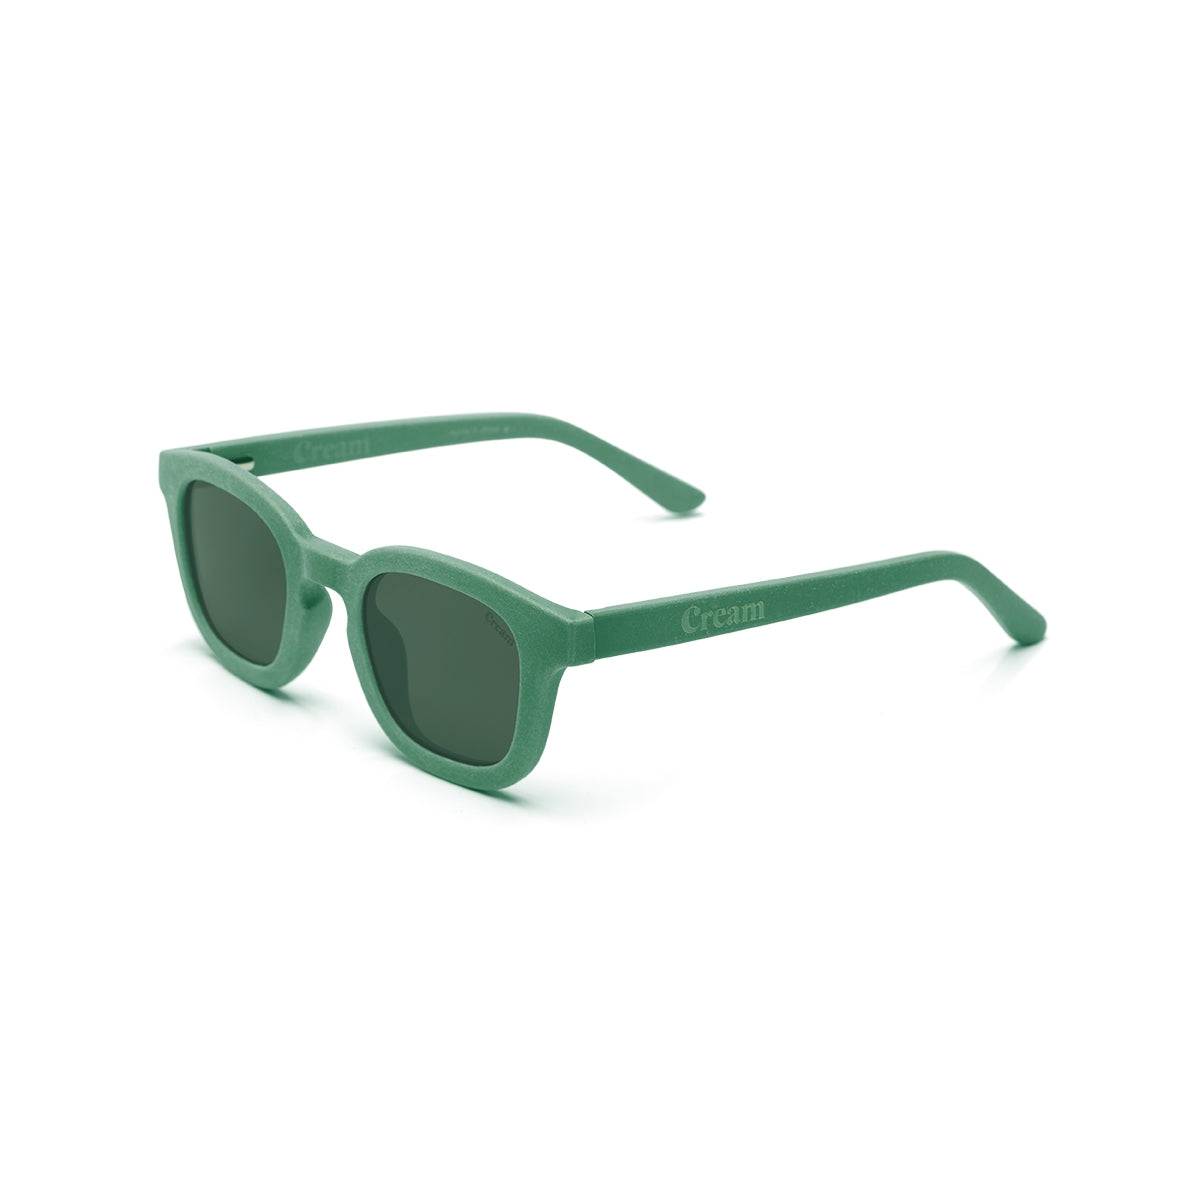 Kids Sunglasses - Cream 02 | Bright Green